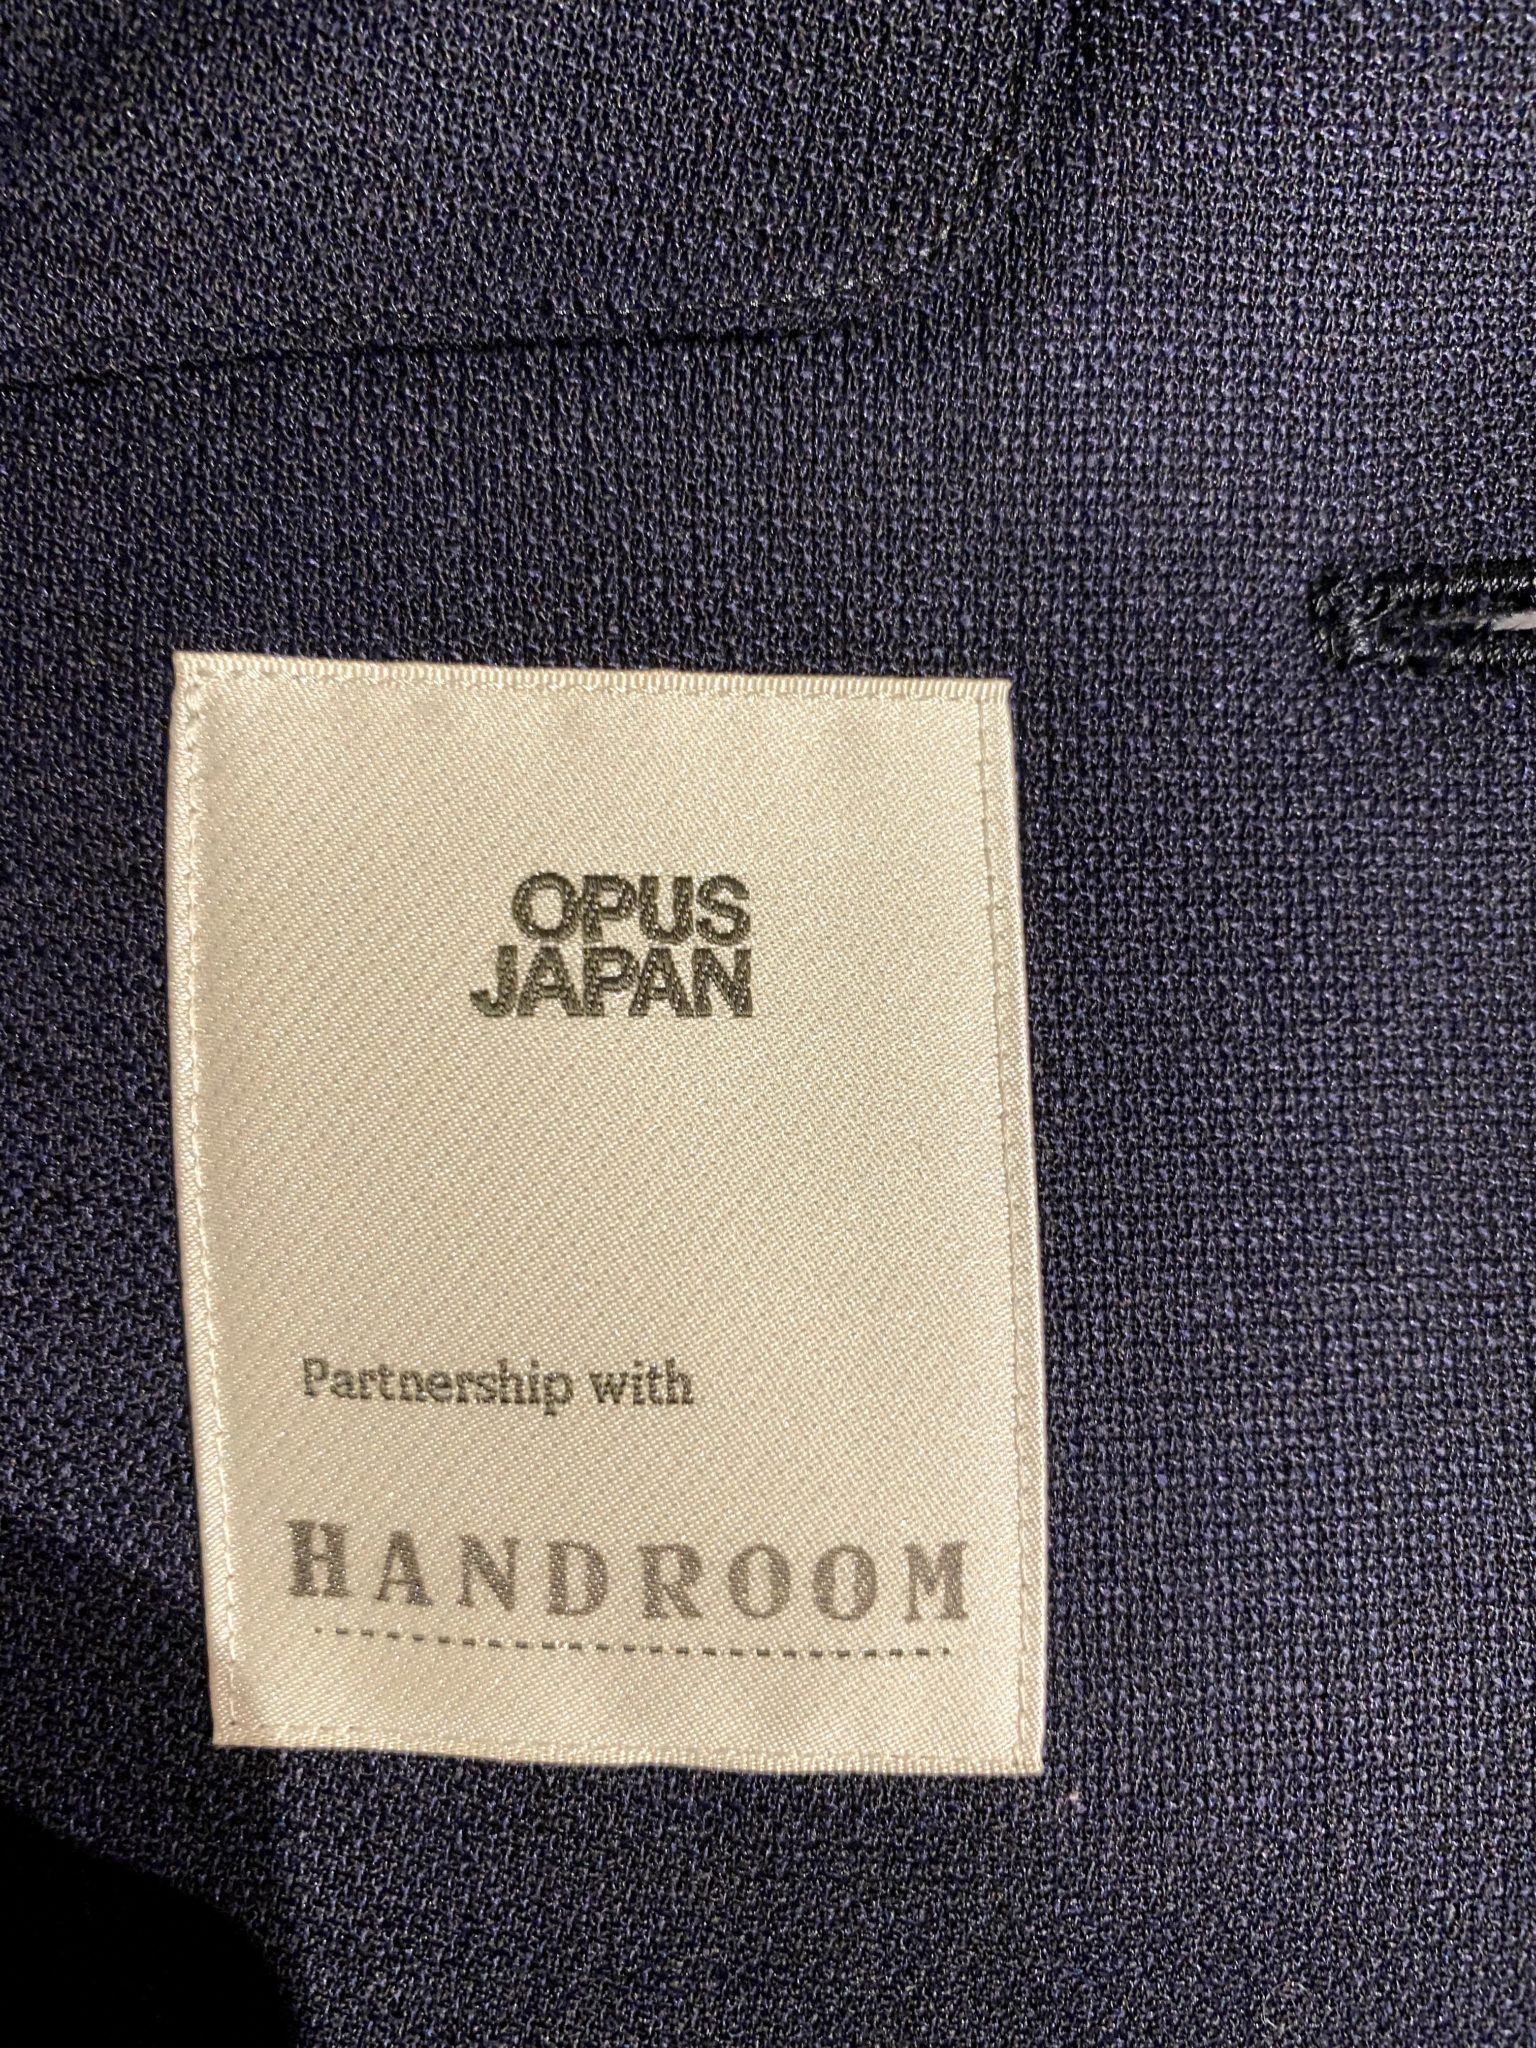 OPUS JAPAN,HAND ROOM